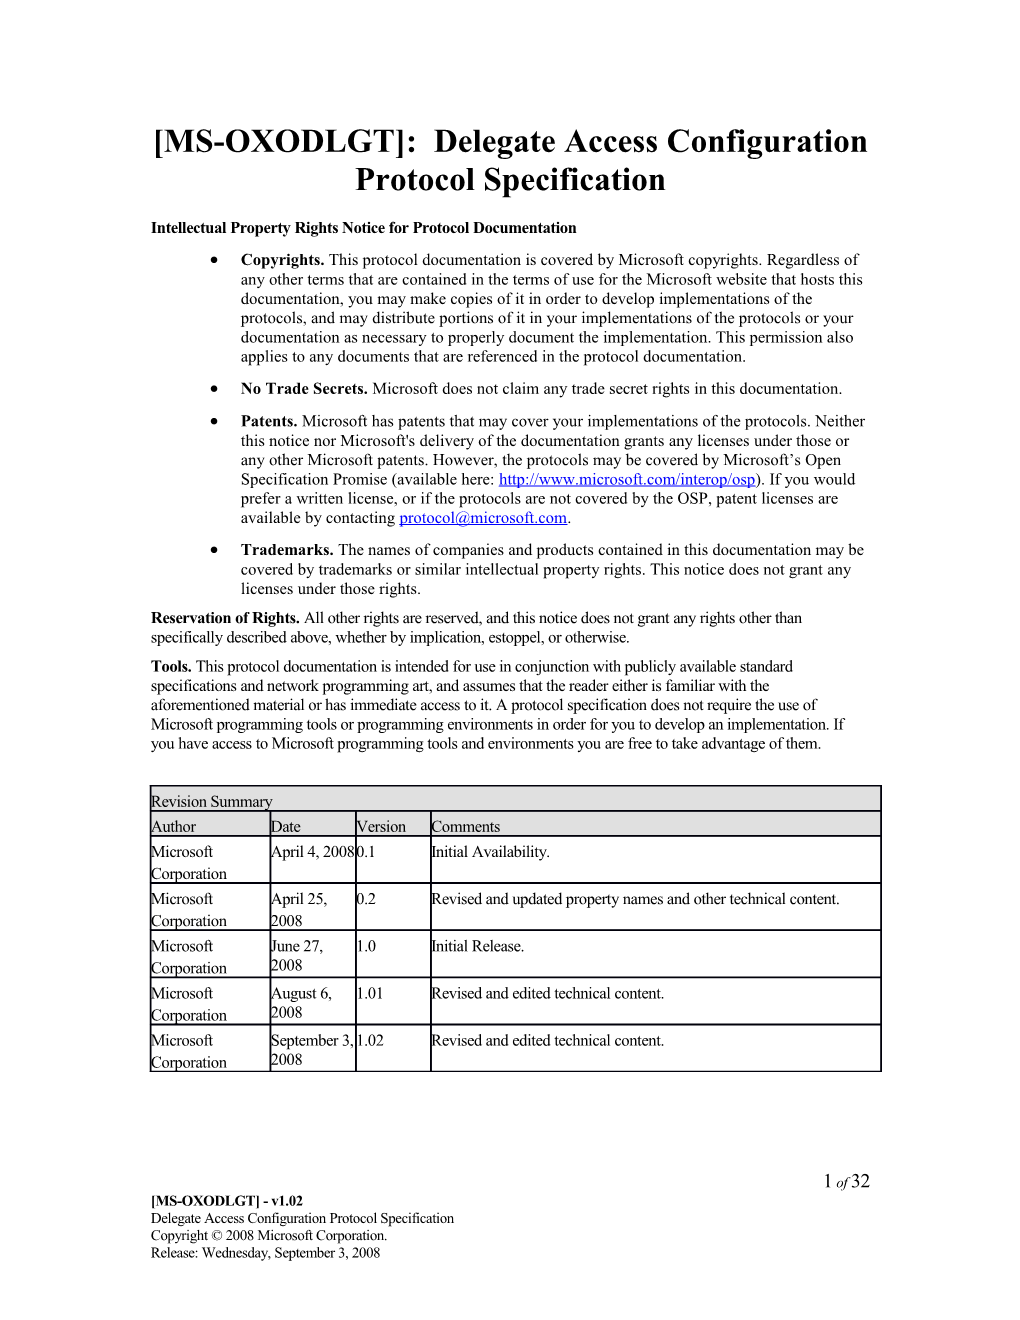 MS-OXODLGT : Delegate Access Configuration Protocol Specification